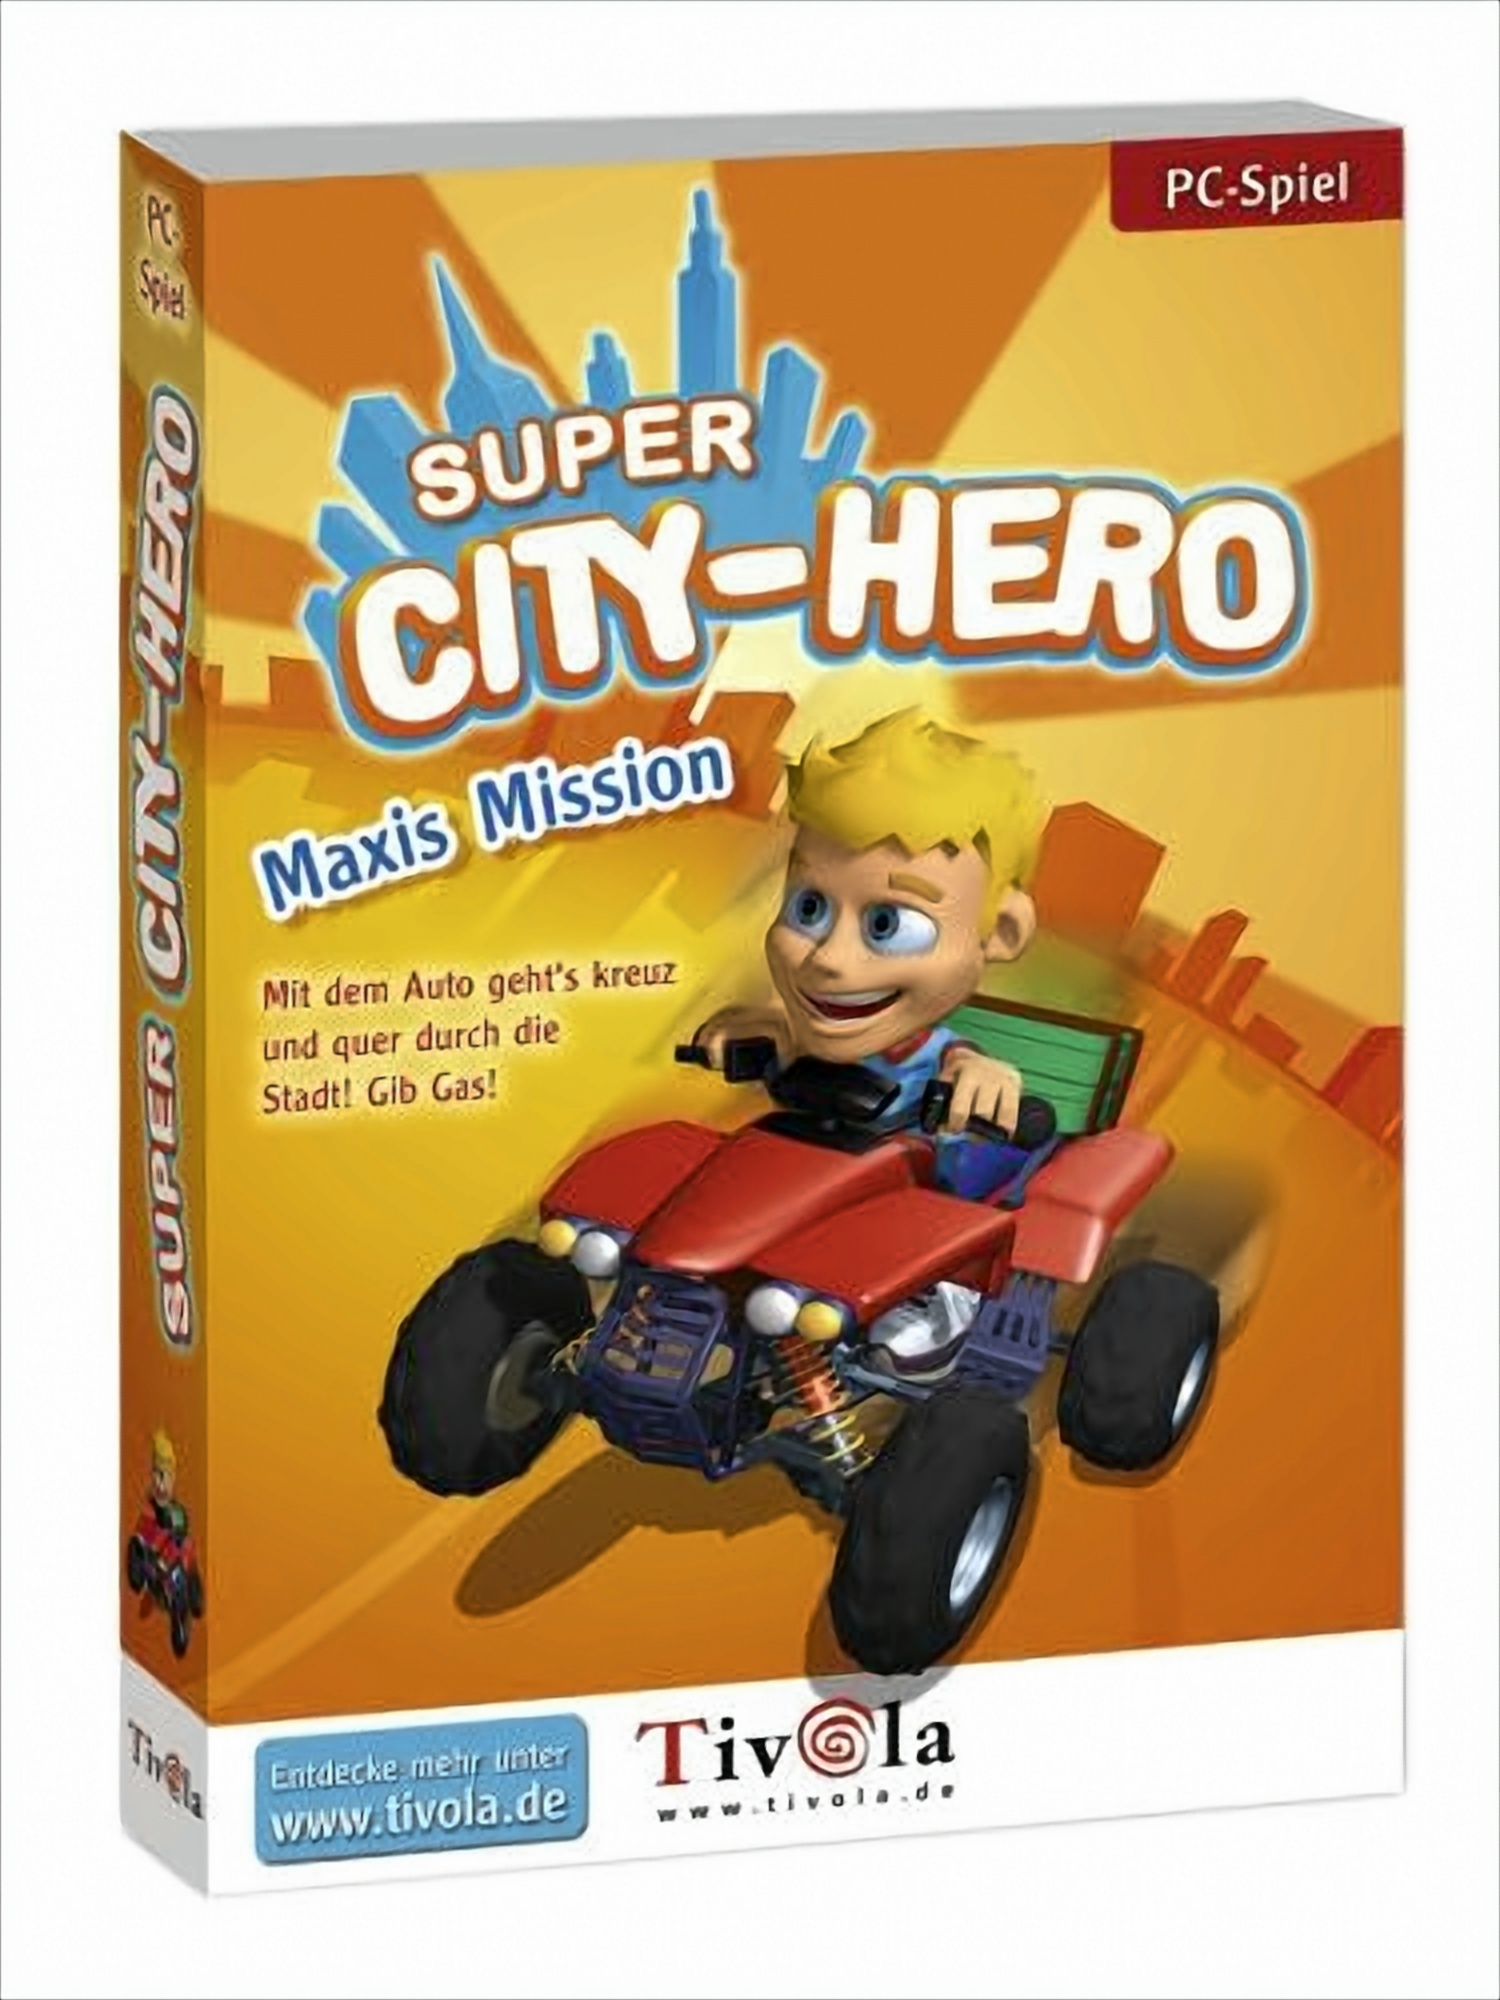 Mission Super - [PC] City Hero: Maxis